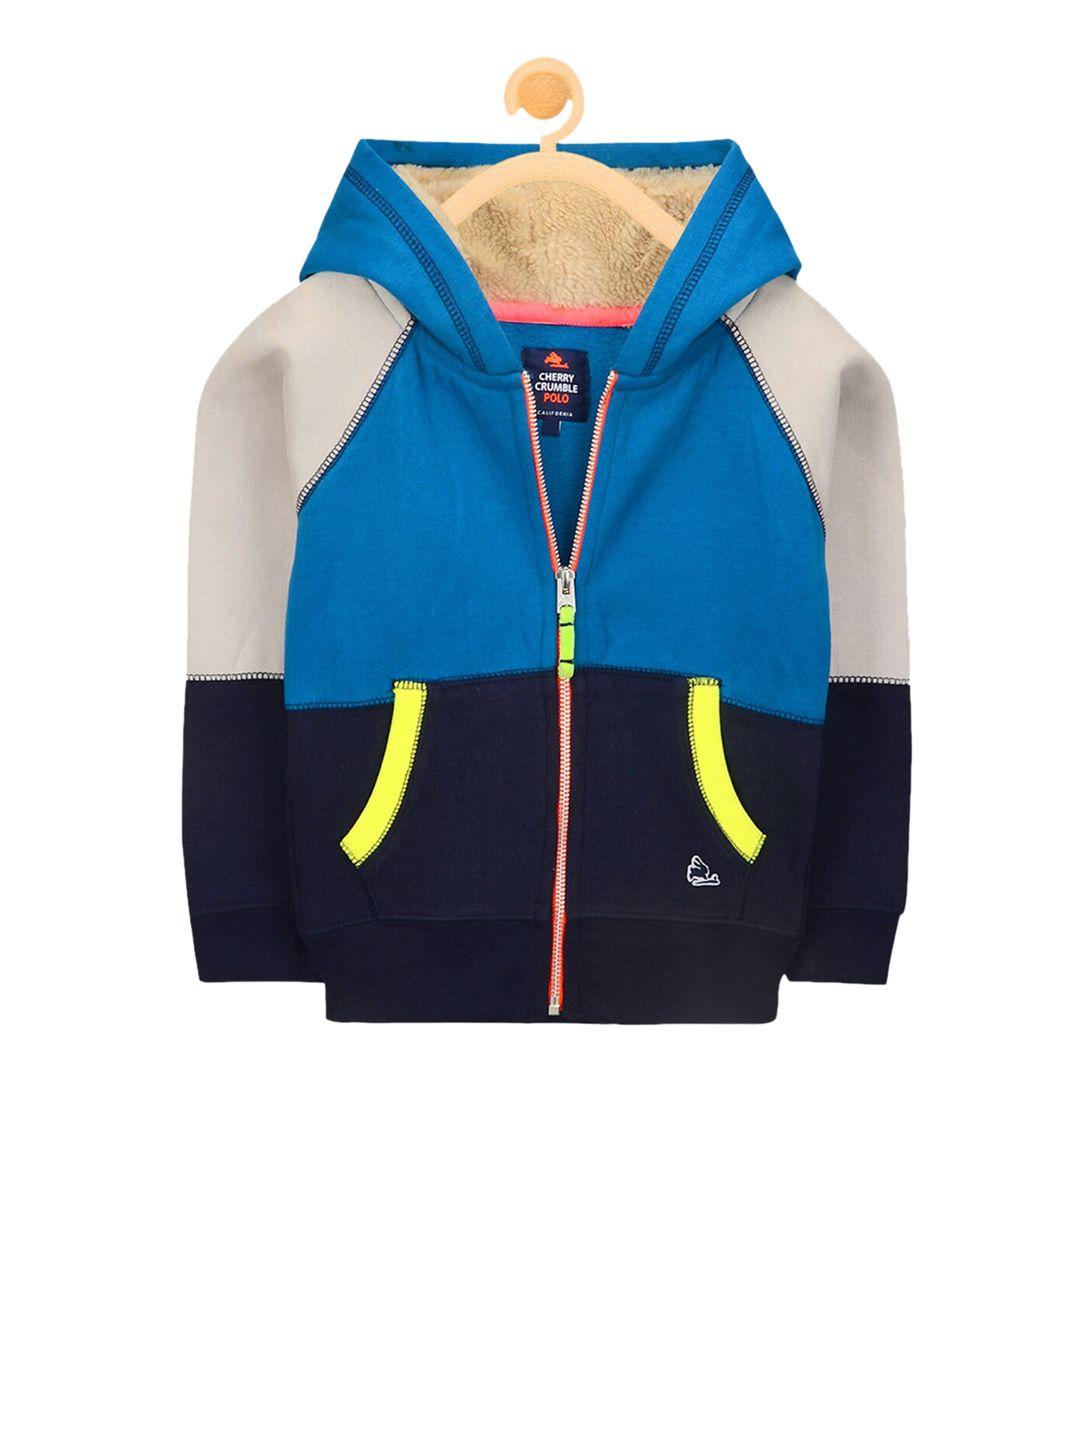 cherry crumble unisex kids blue & cream-coloured colourblocked hooded sweatshirt